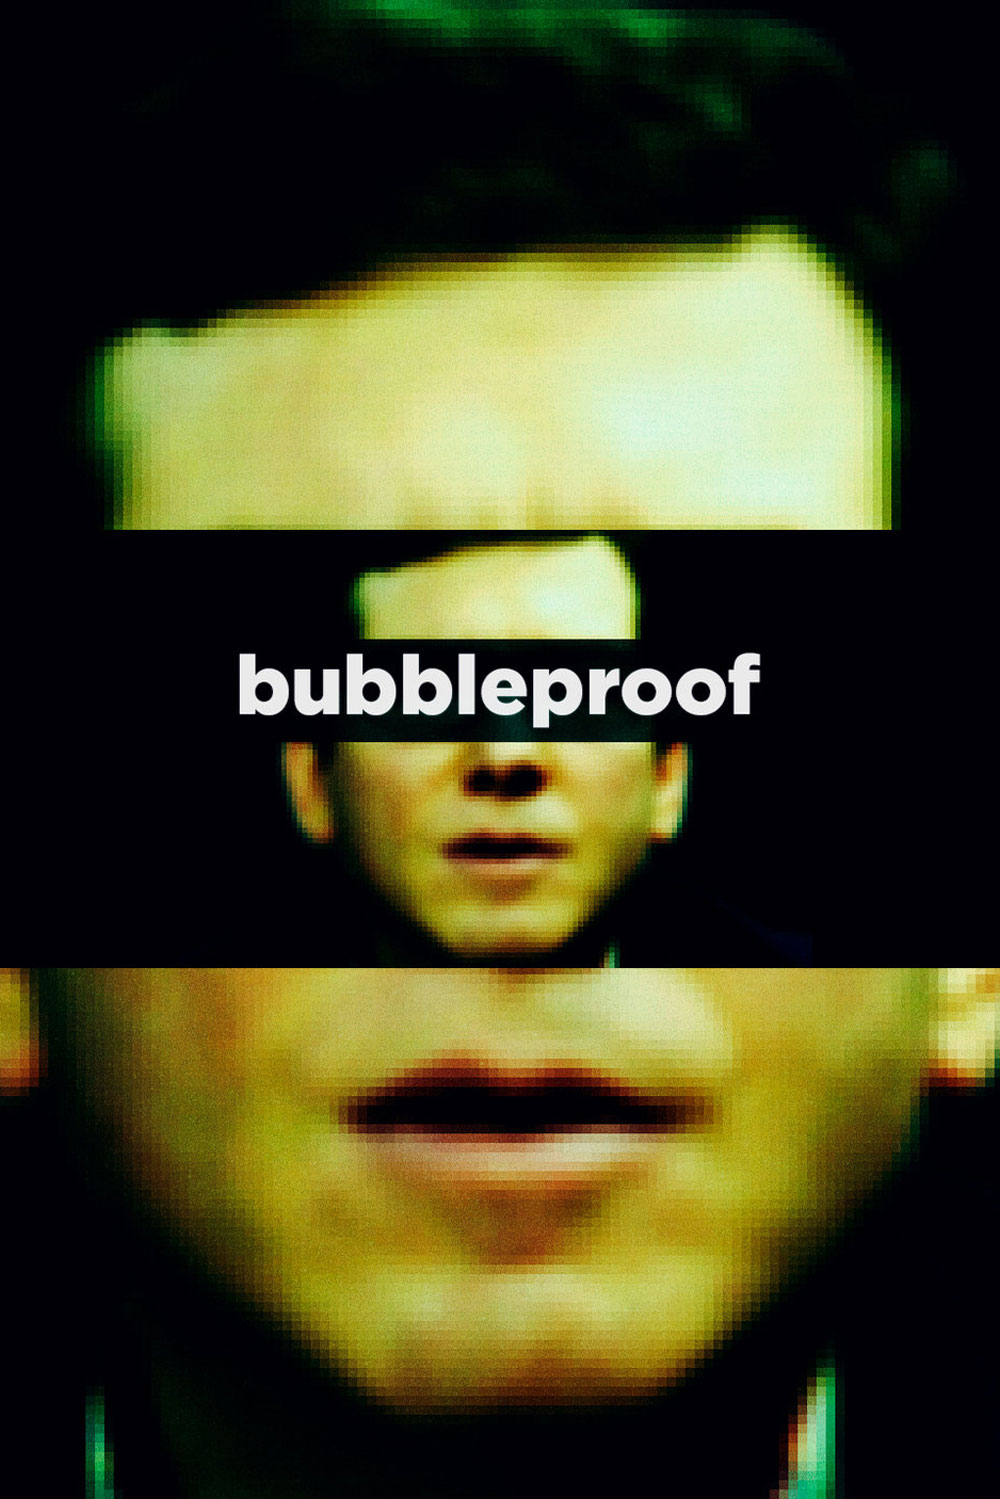 bubbleproof